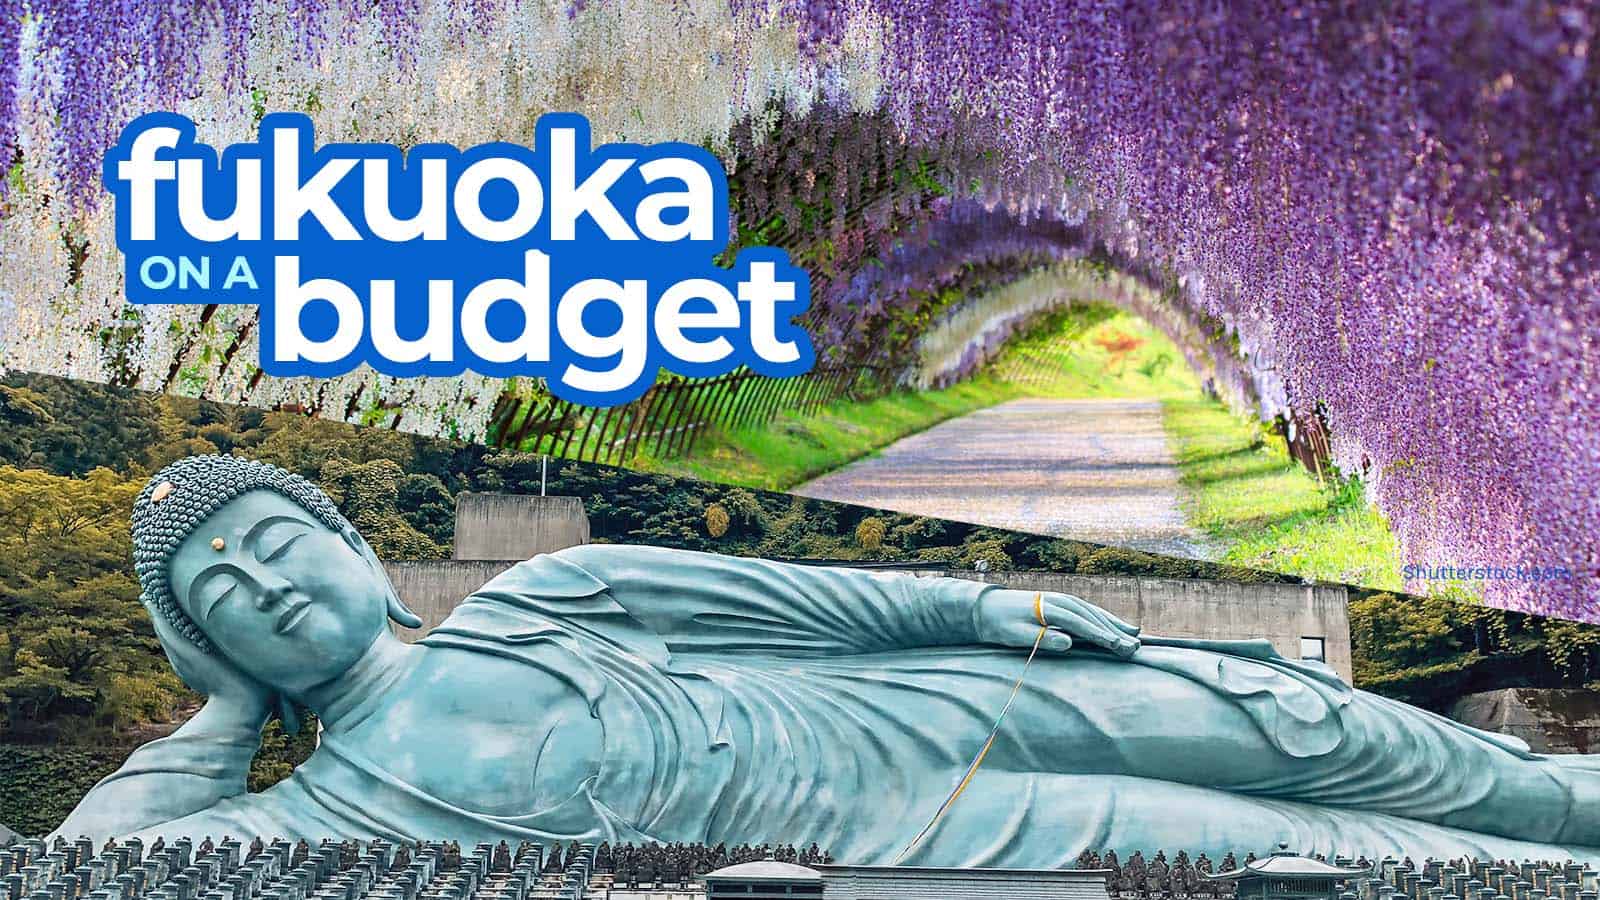 FUKUOKA TRAVEL GUIDE: Budget Itinerary, Things to Do